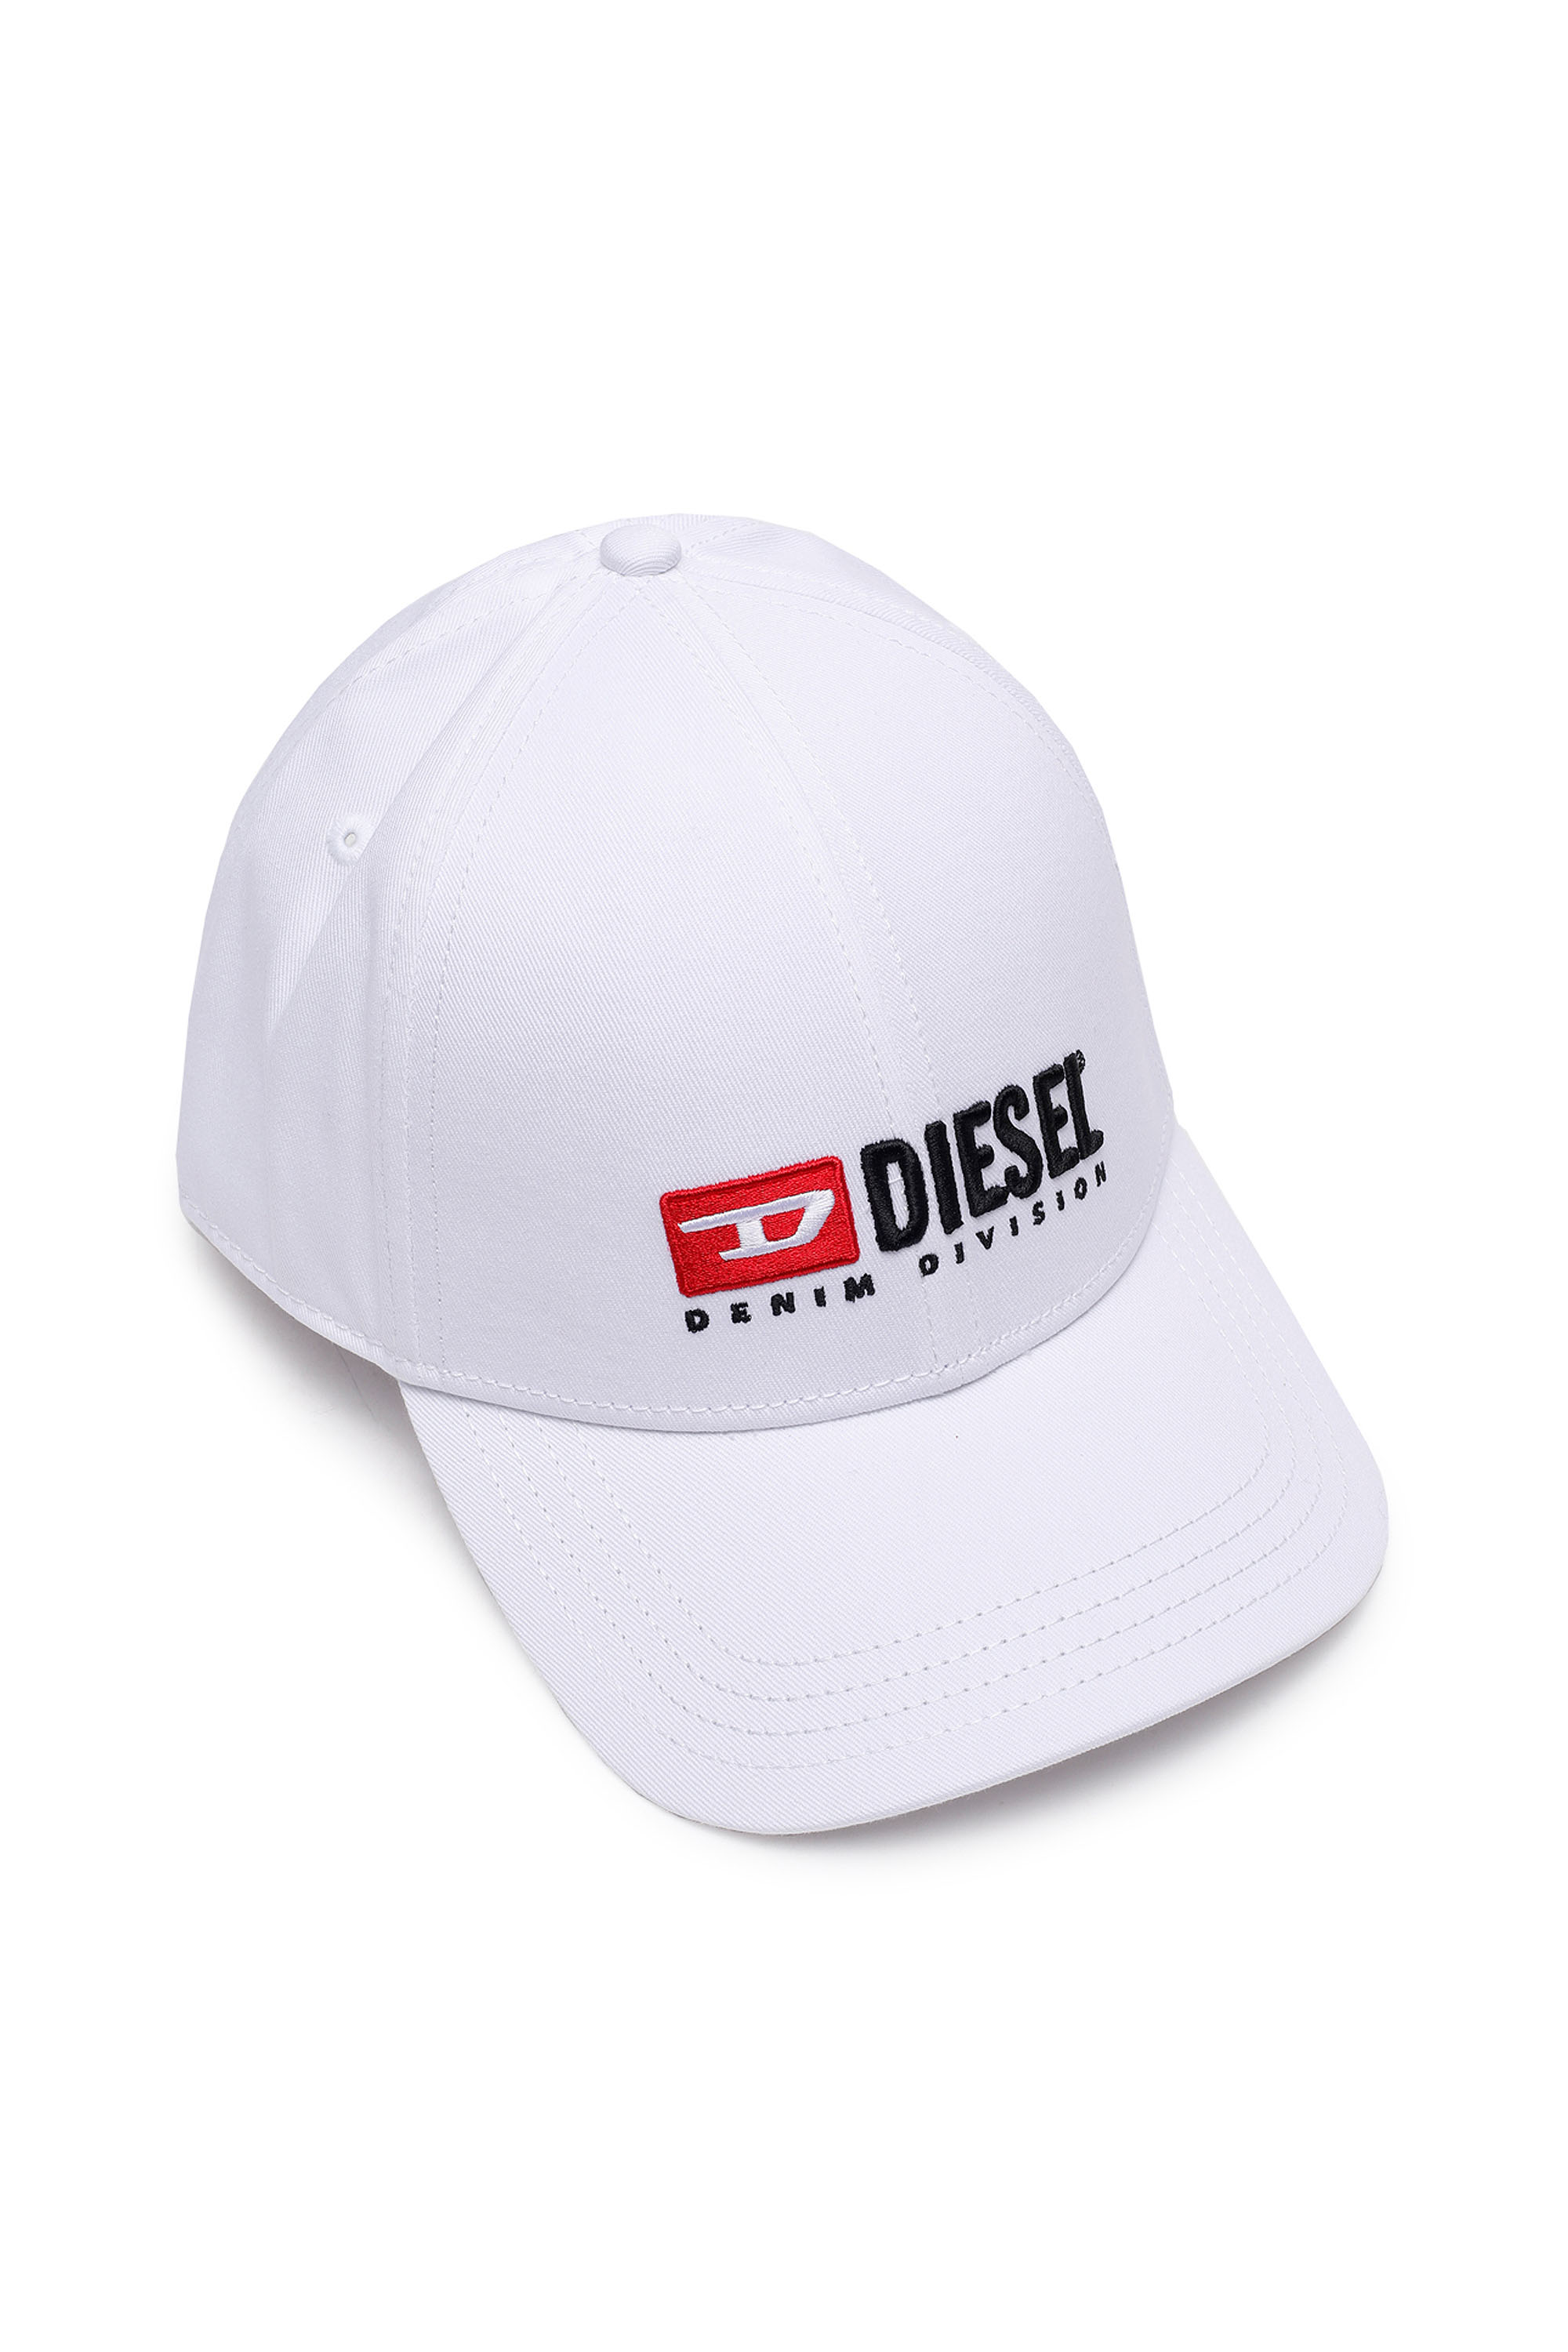 Diesel - CORRY-DIV, Unisex Baseball cap with Denim Division logo in White - Image 3